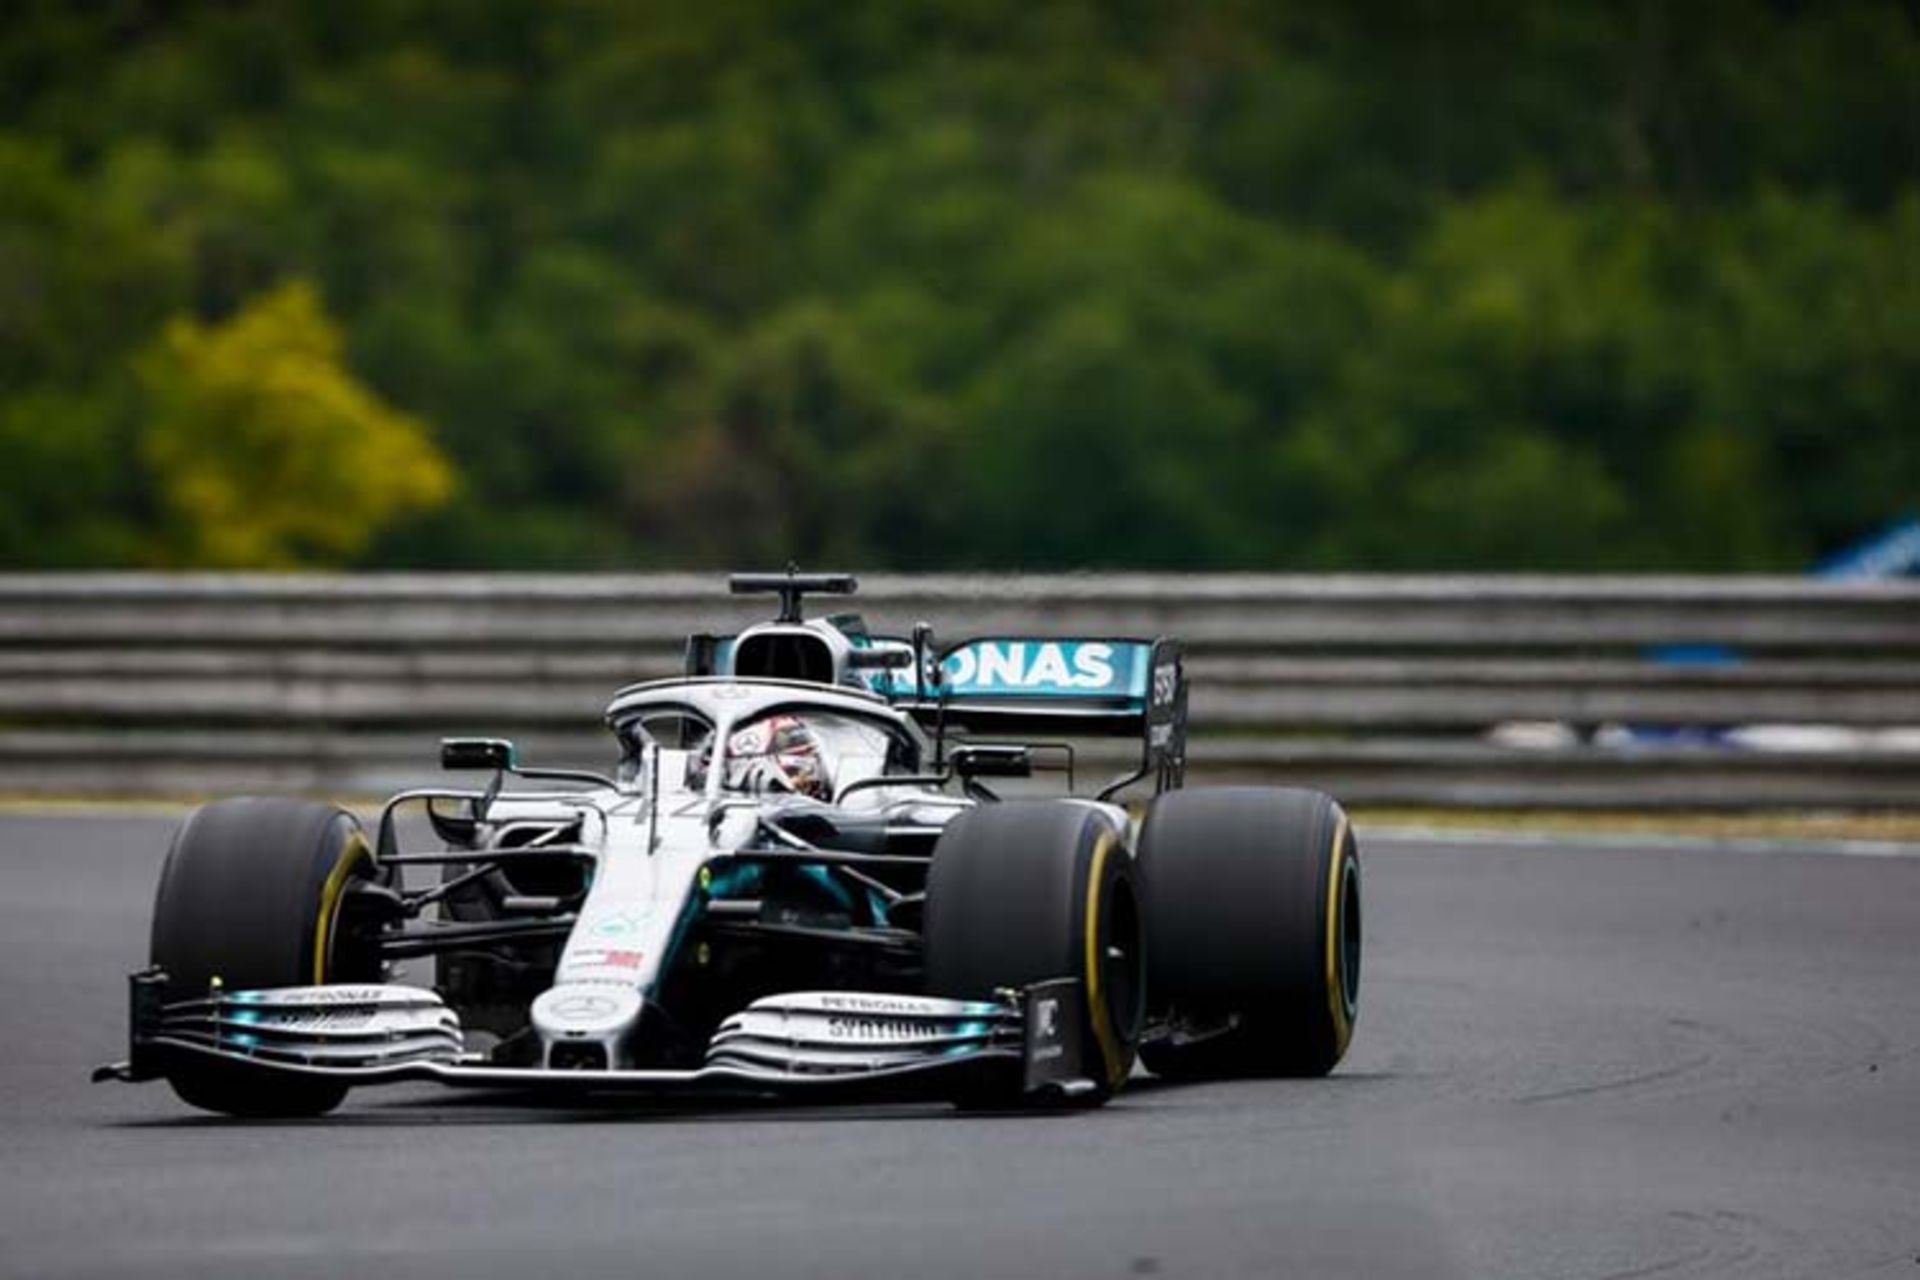 2019 Hungarian formula one Grand Prix / گرندپری فرمول یک مجارستان 2019